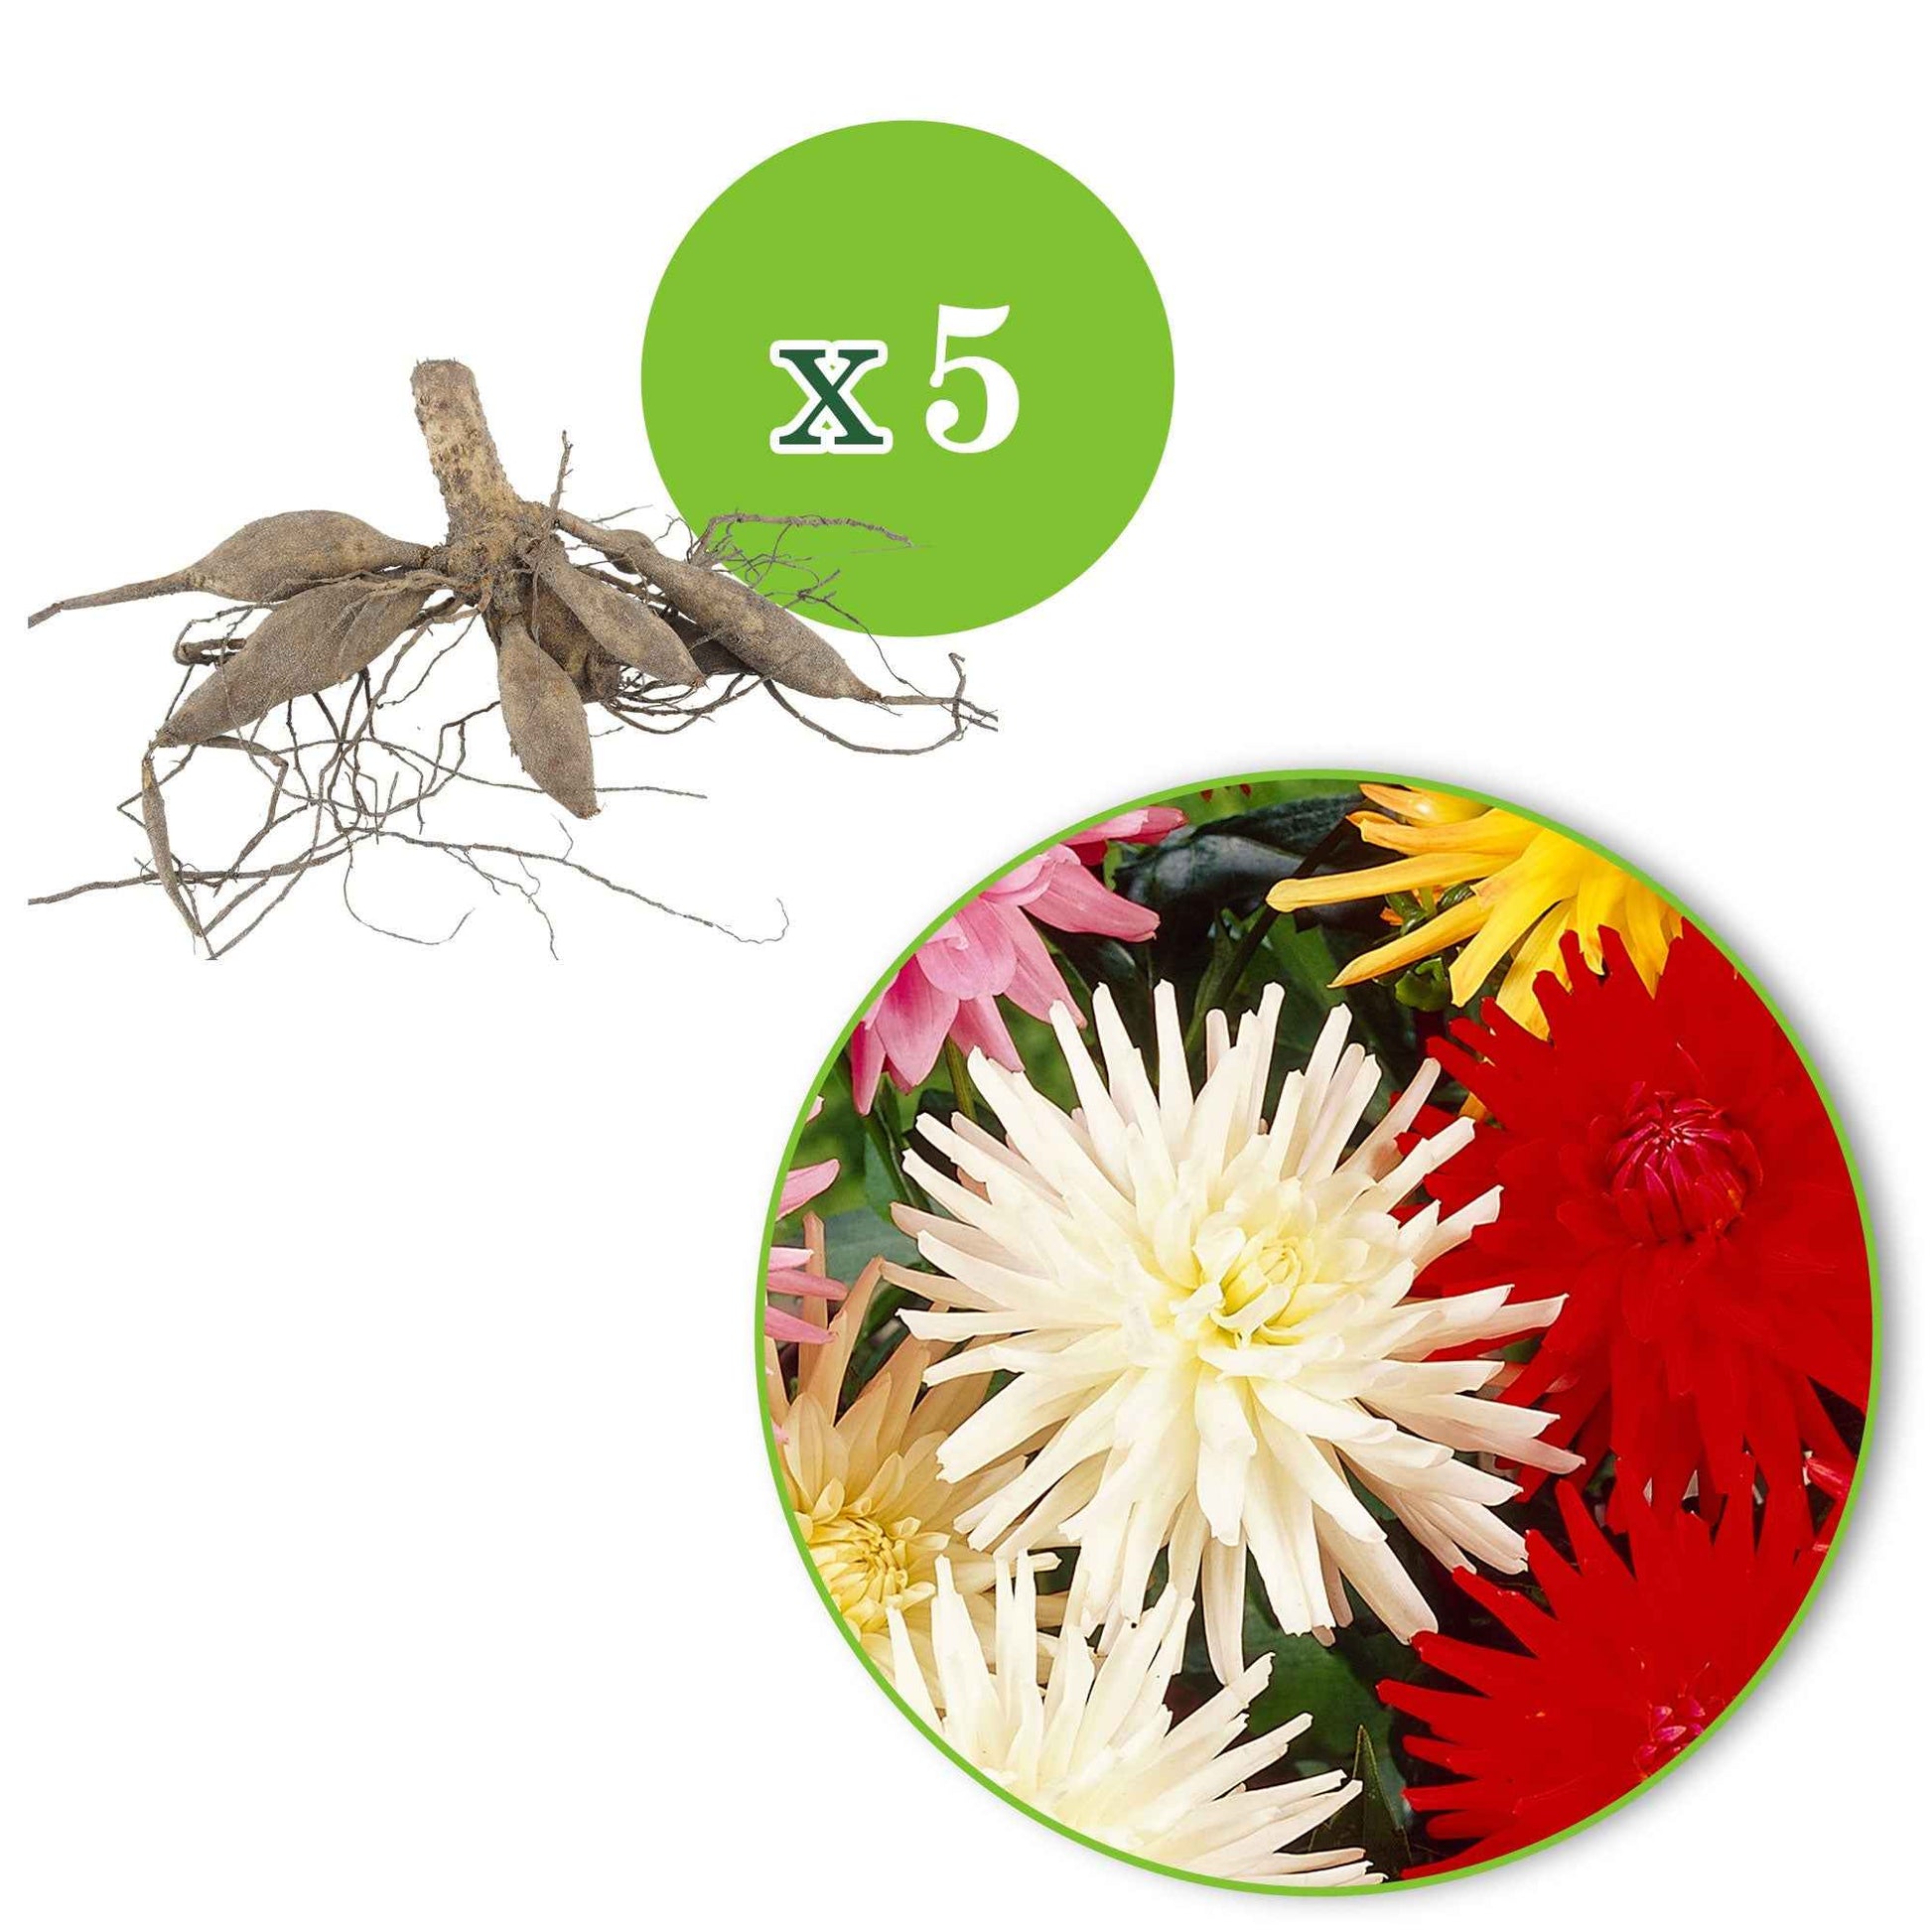 5x Dahlie cactus - Mischung Biologisch - Blumenzwiebel Geschenke